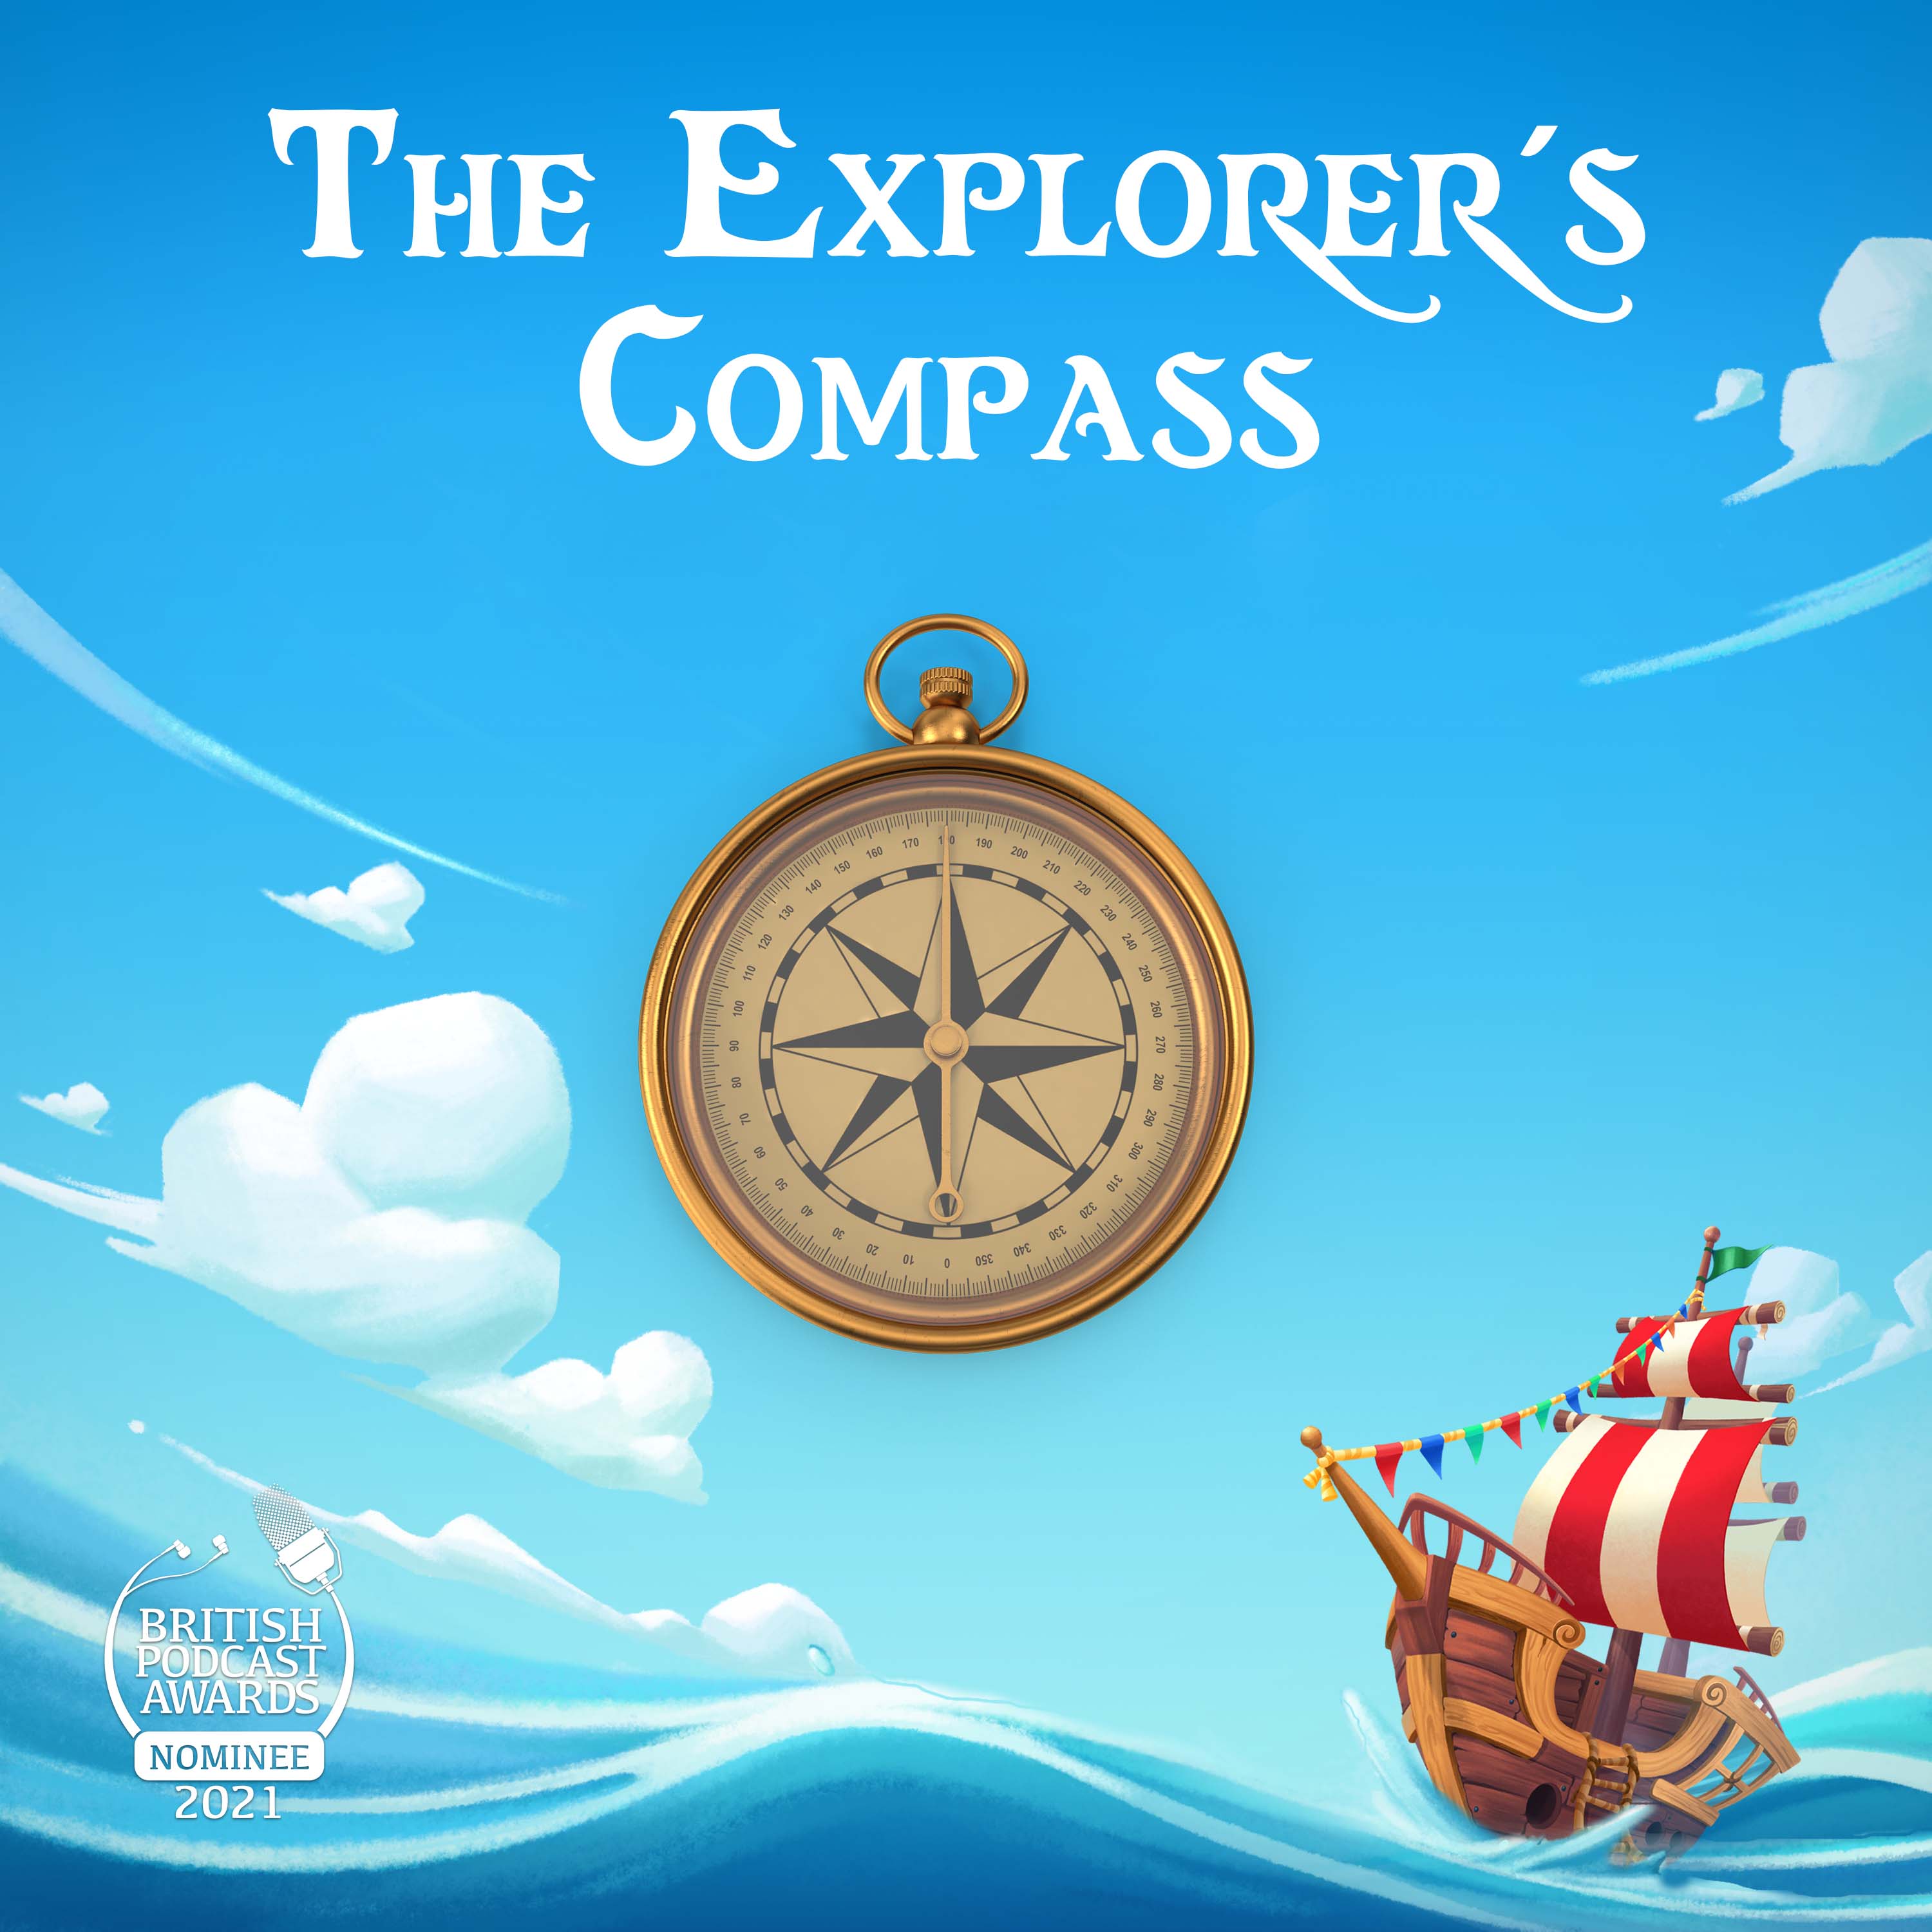 The Explorer's Compass